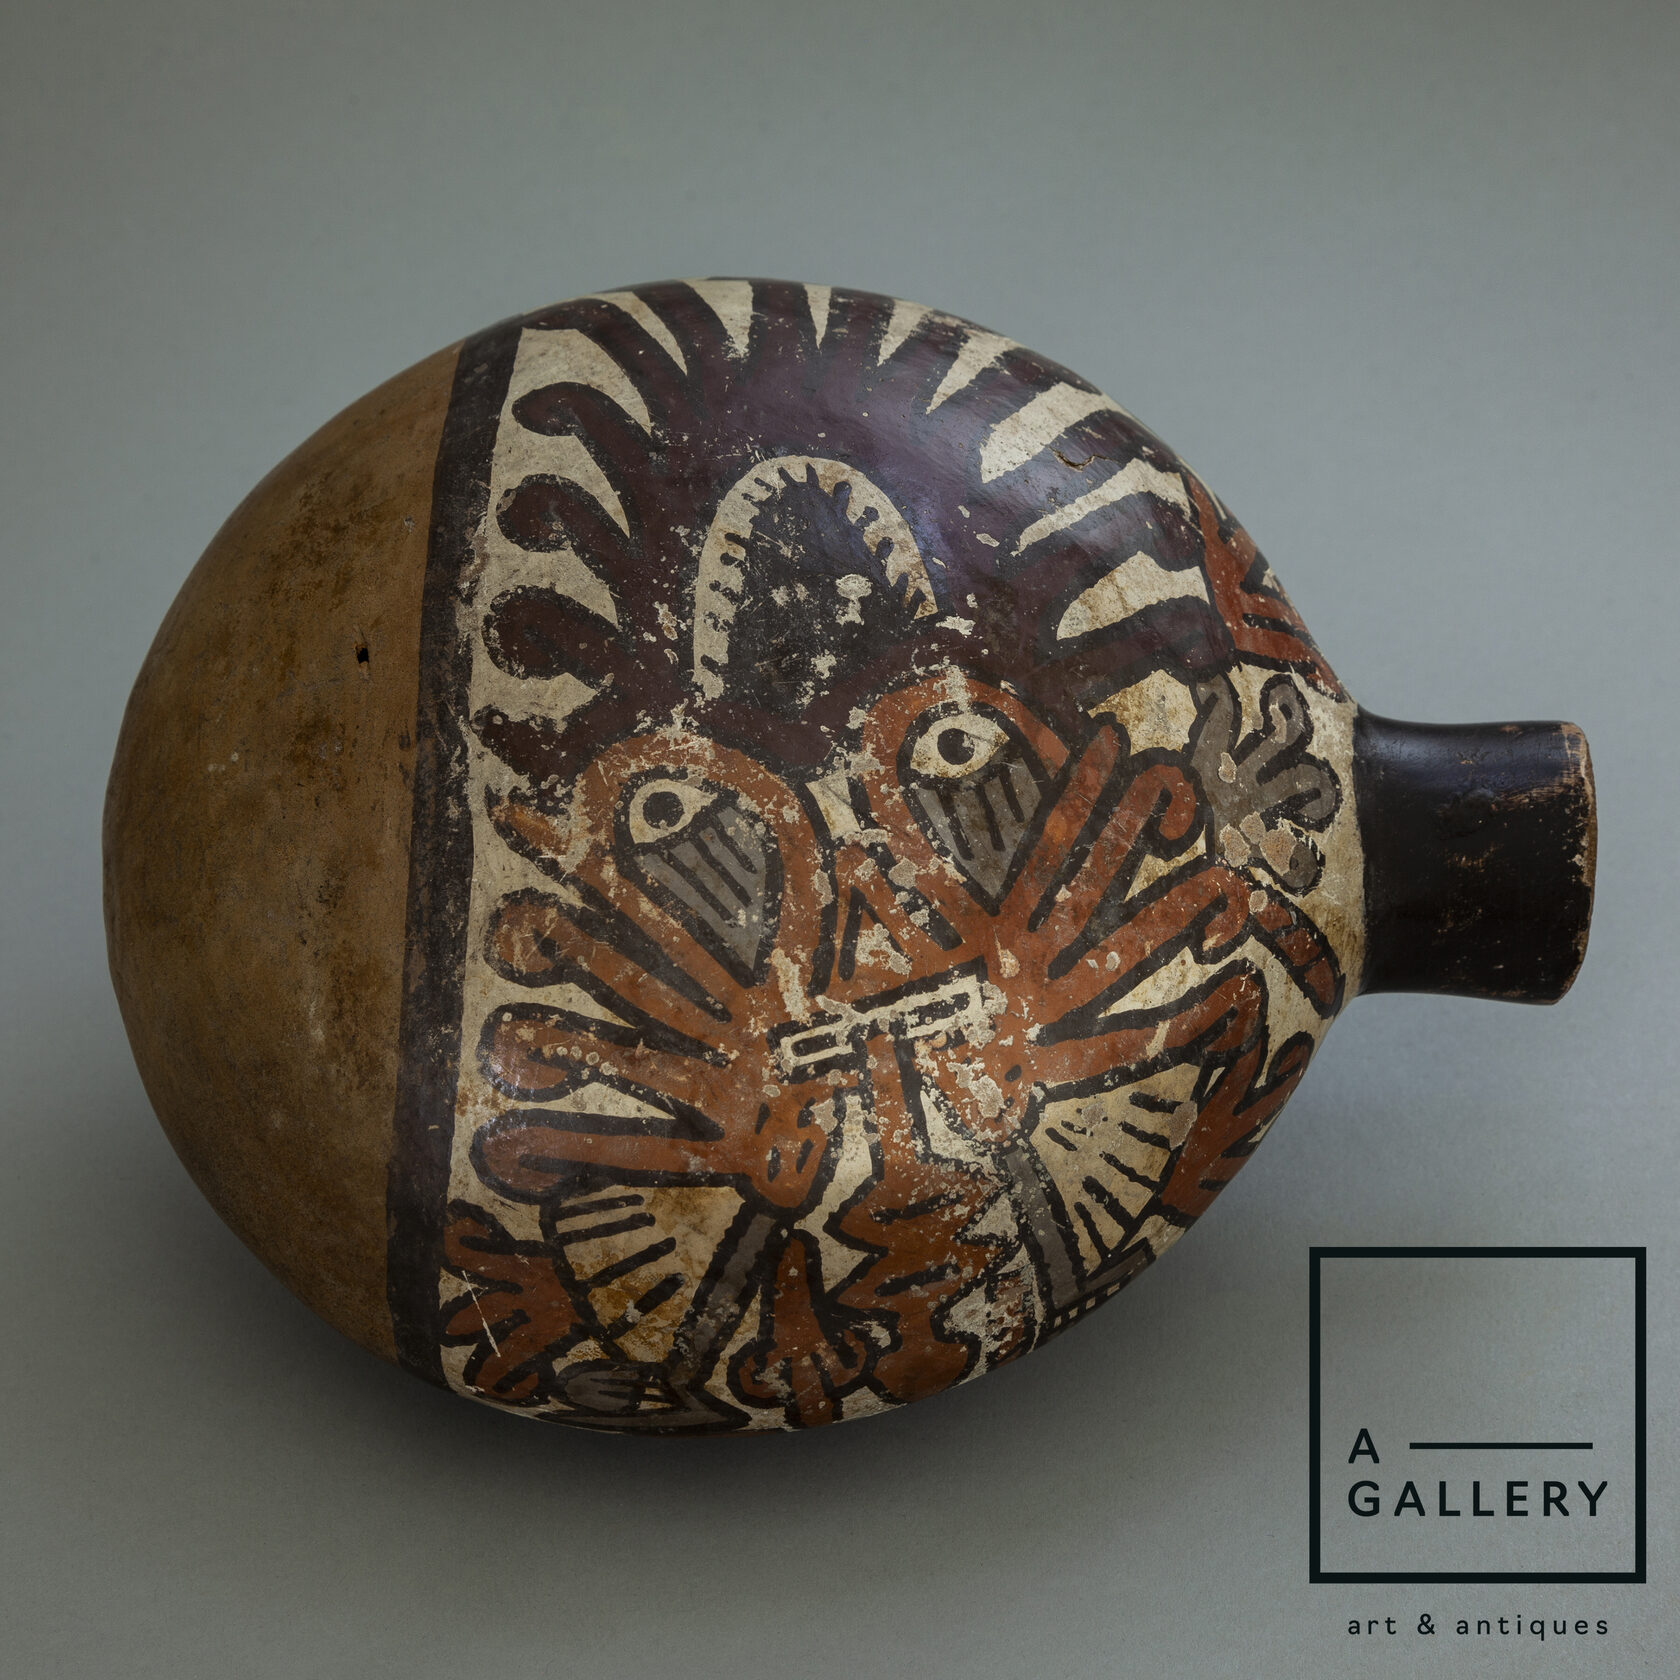 Сосуд культуры Наска, Перу, 550 – 750 гг. н.э. Коллекция A-Gallery, Москва.